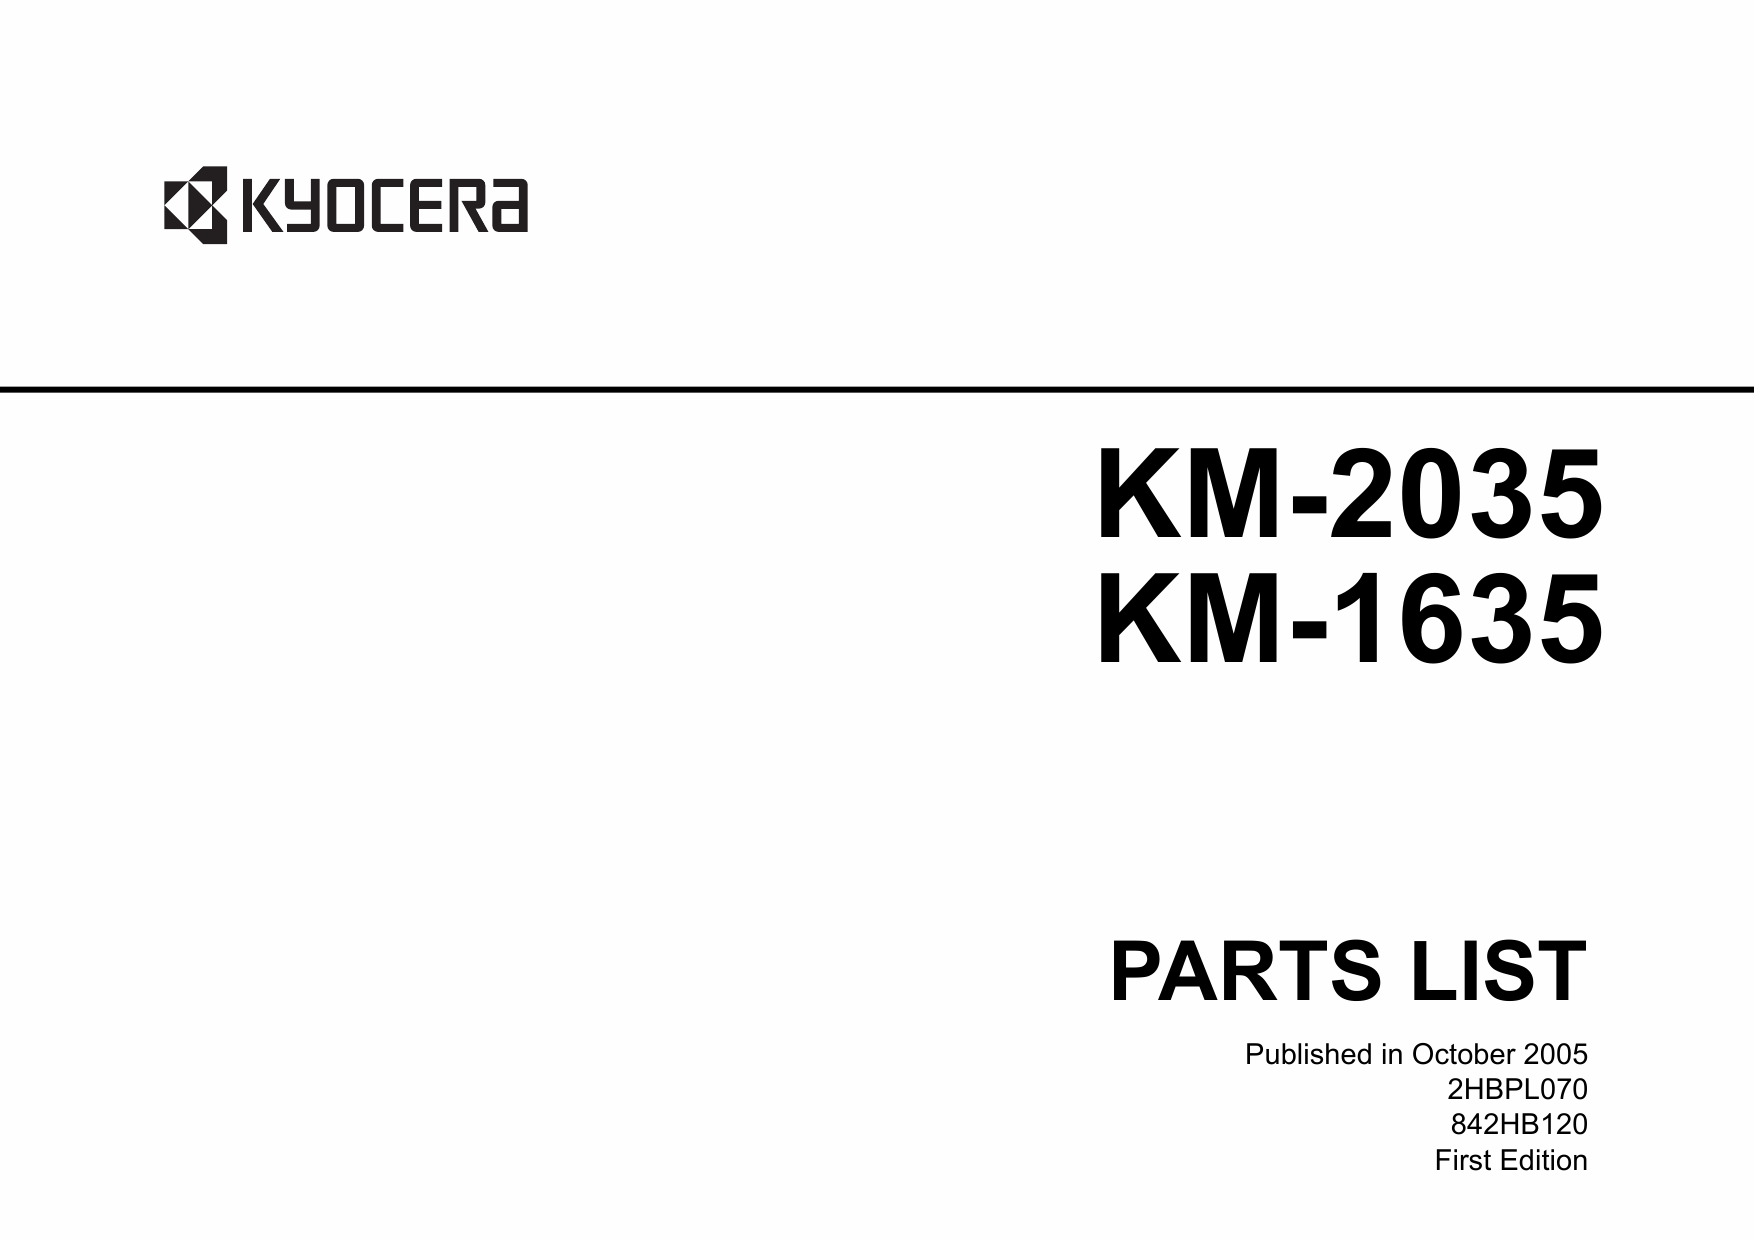 KYOCERA Copier KM-2035 1635 Parts Manual-1